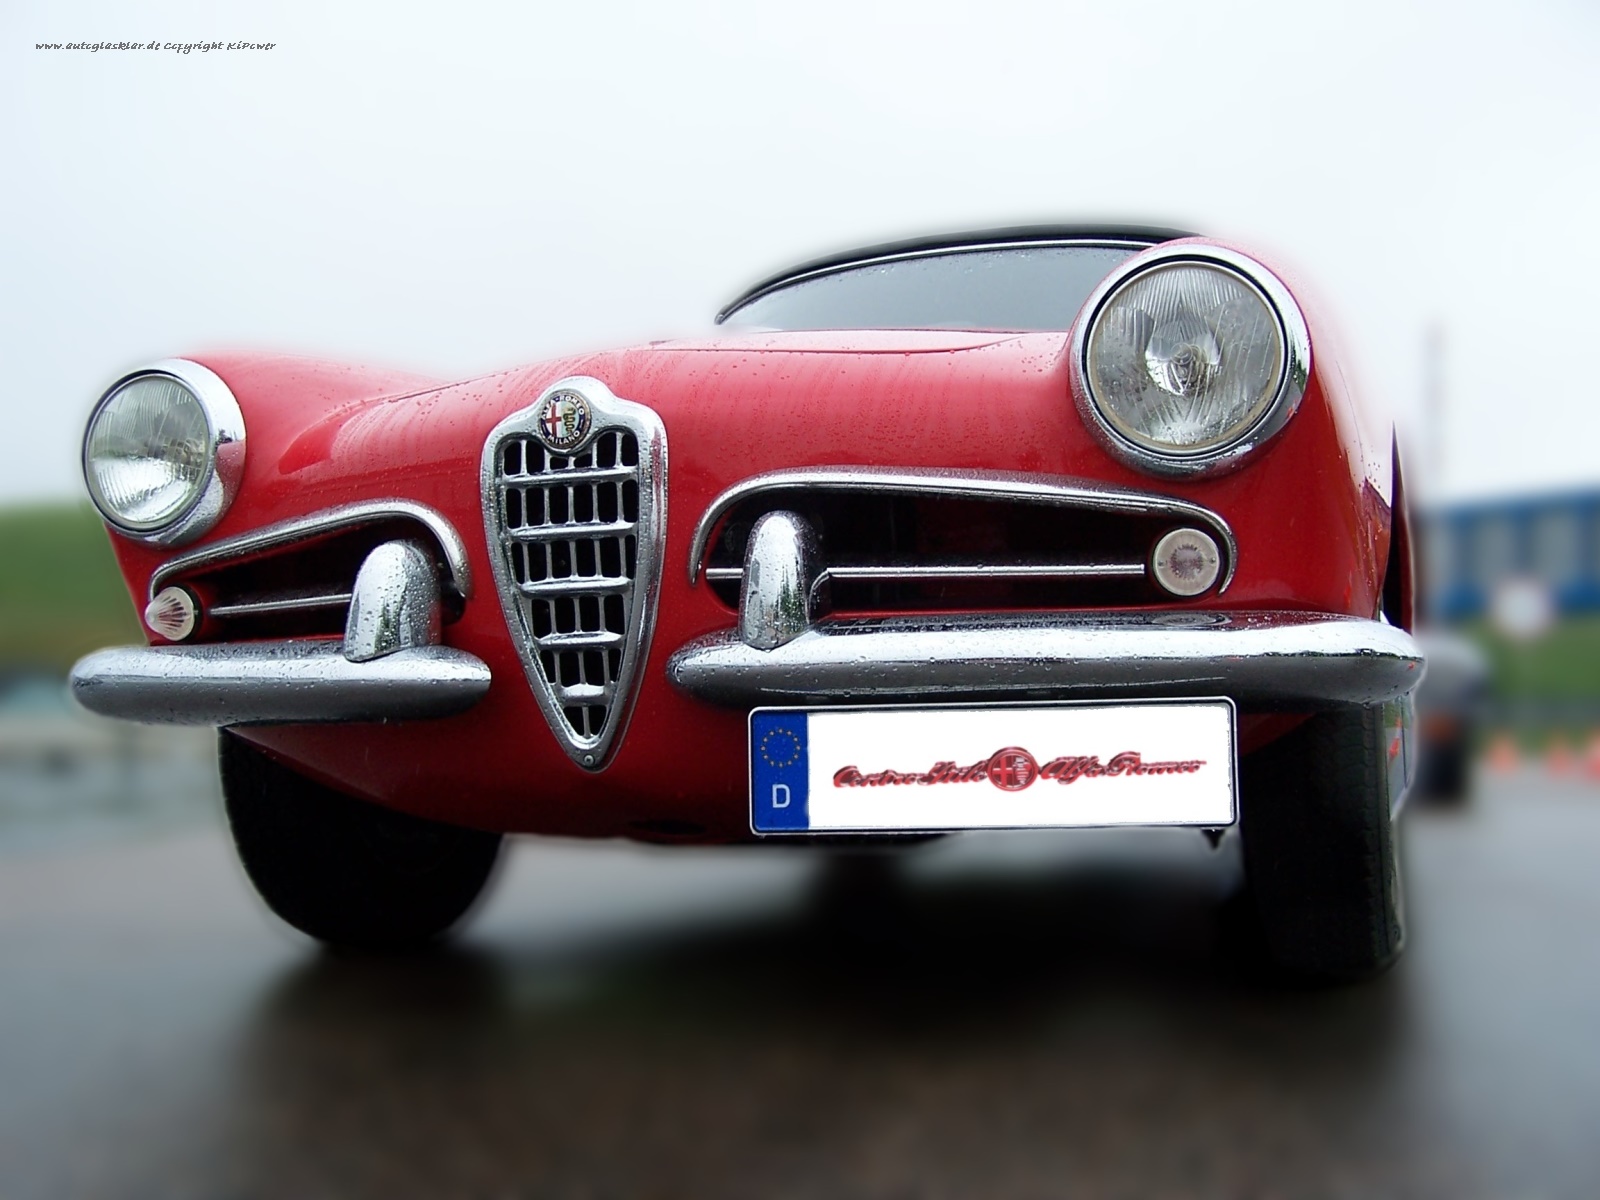 Traumwagen Alfa Romeo Giulia 1600 Spider. Autoglasklar.de Shop